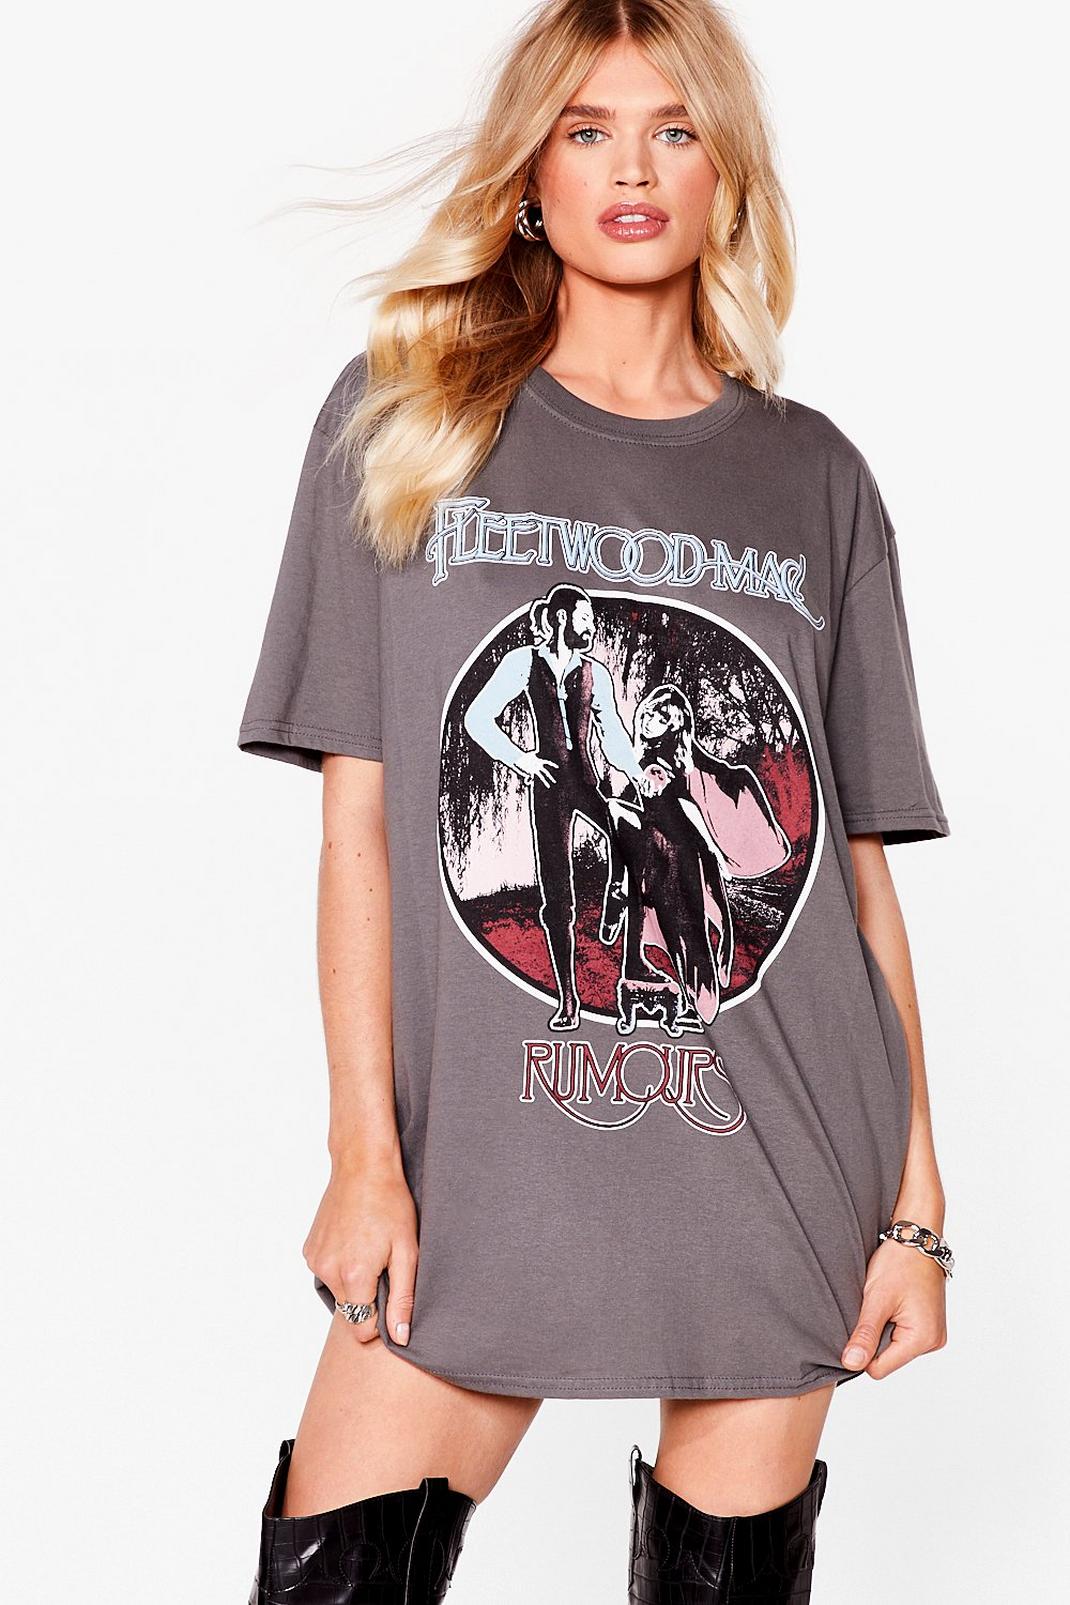 Black Fleetwood Mac Graphic Band T-Shirt Dress image number 1